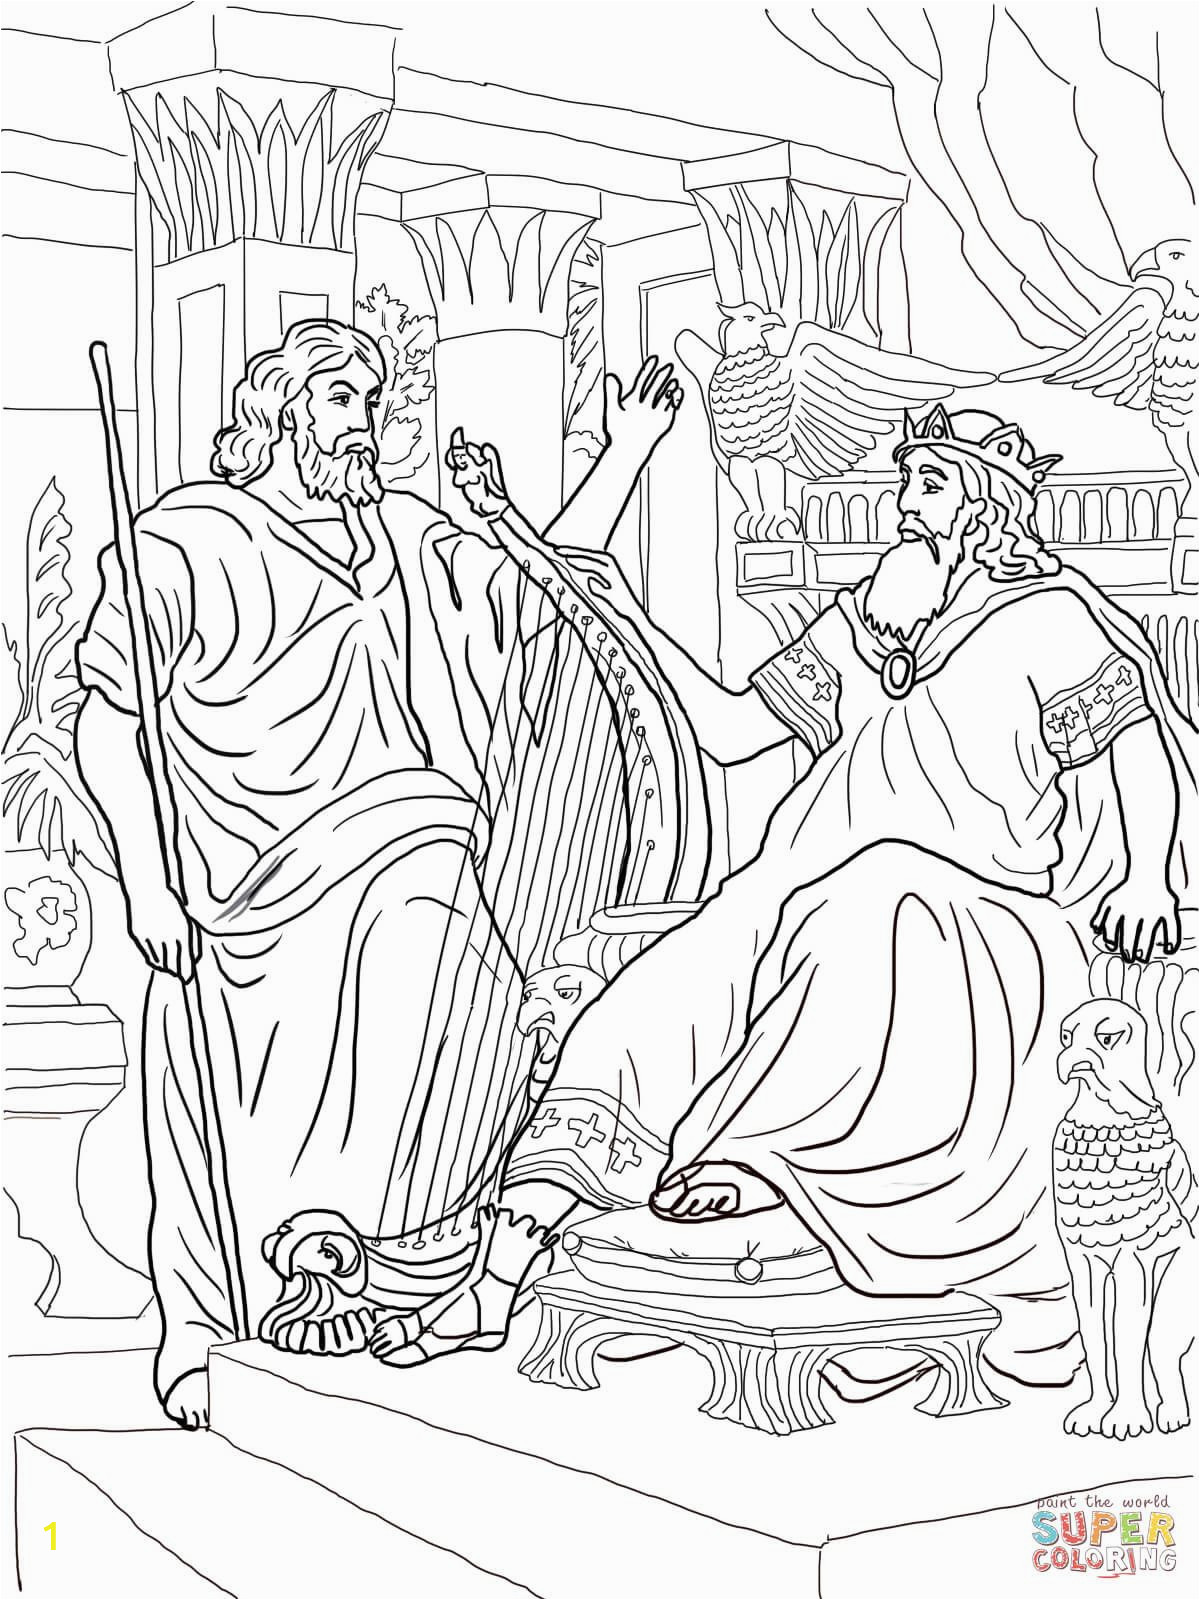 King David and Absalom Coloring Pages King David and Nathan Super Coloring